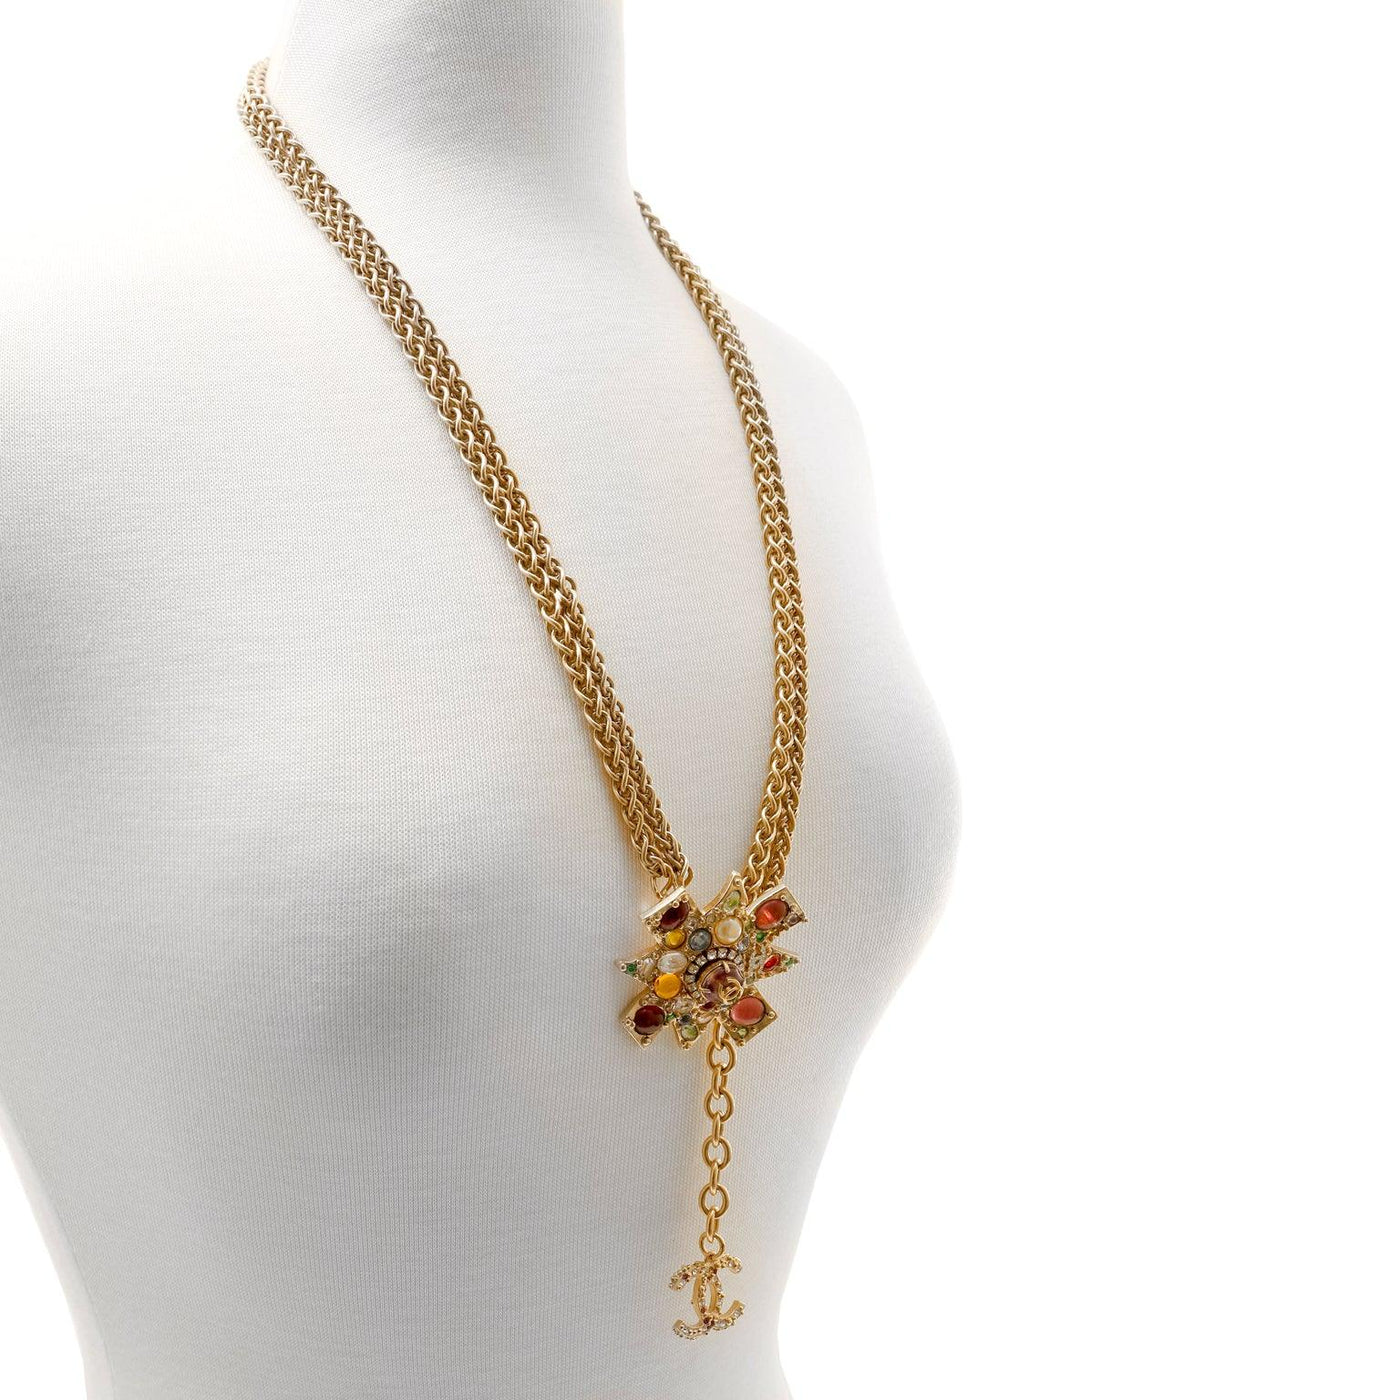 Chanel Byzantine Gripoix Star Necklace - Only Authentics